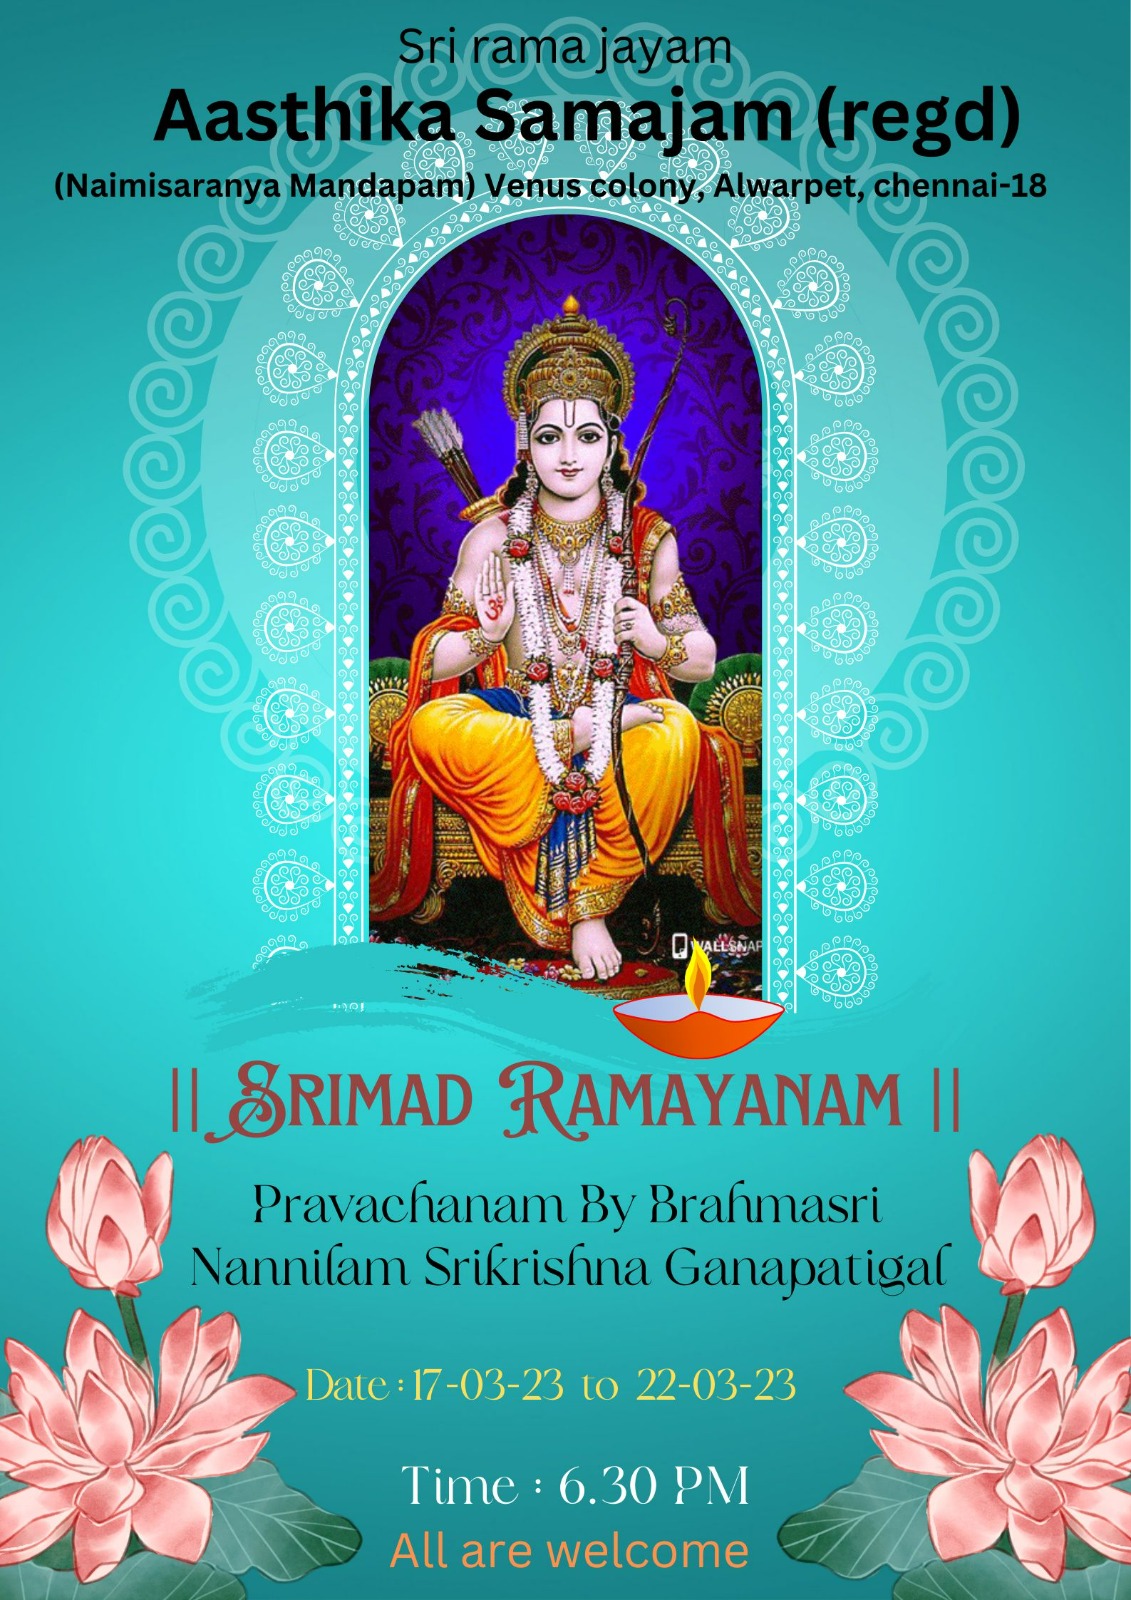 Srimad Ramayanam - Vaithikasri